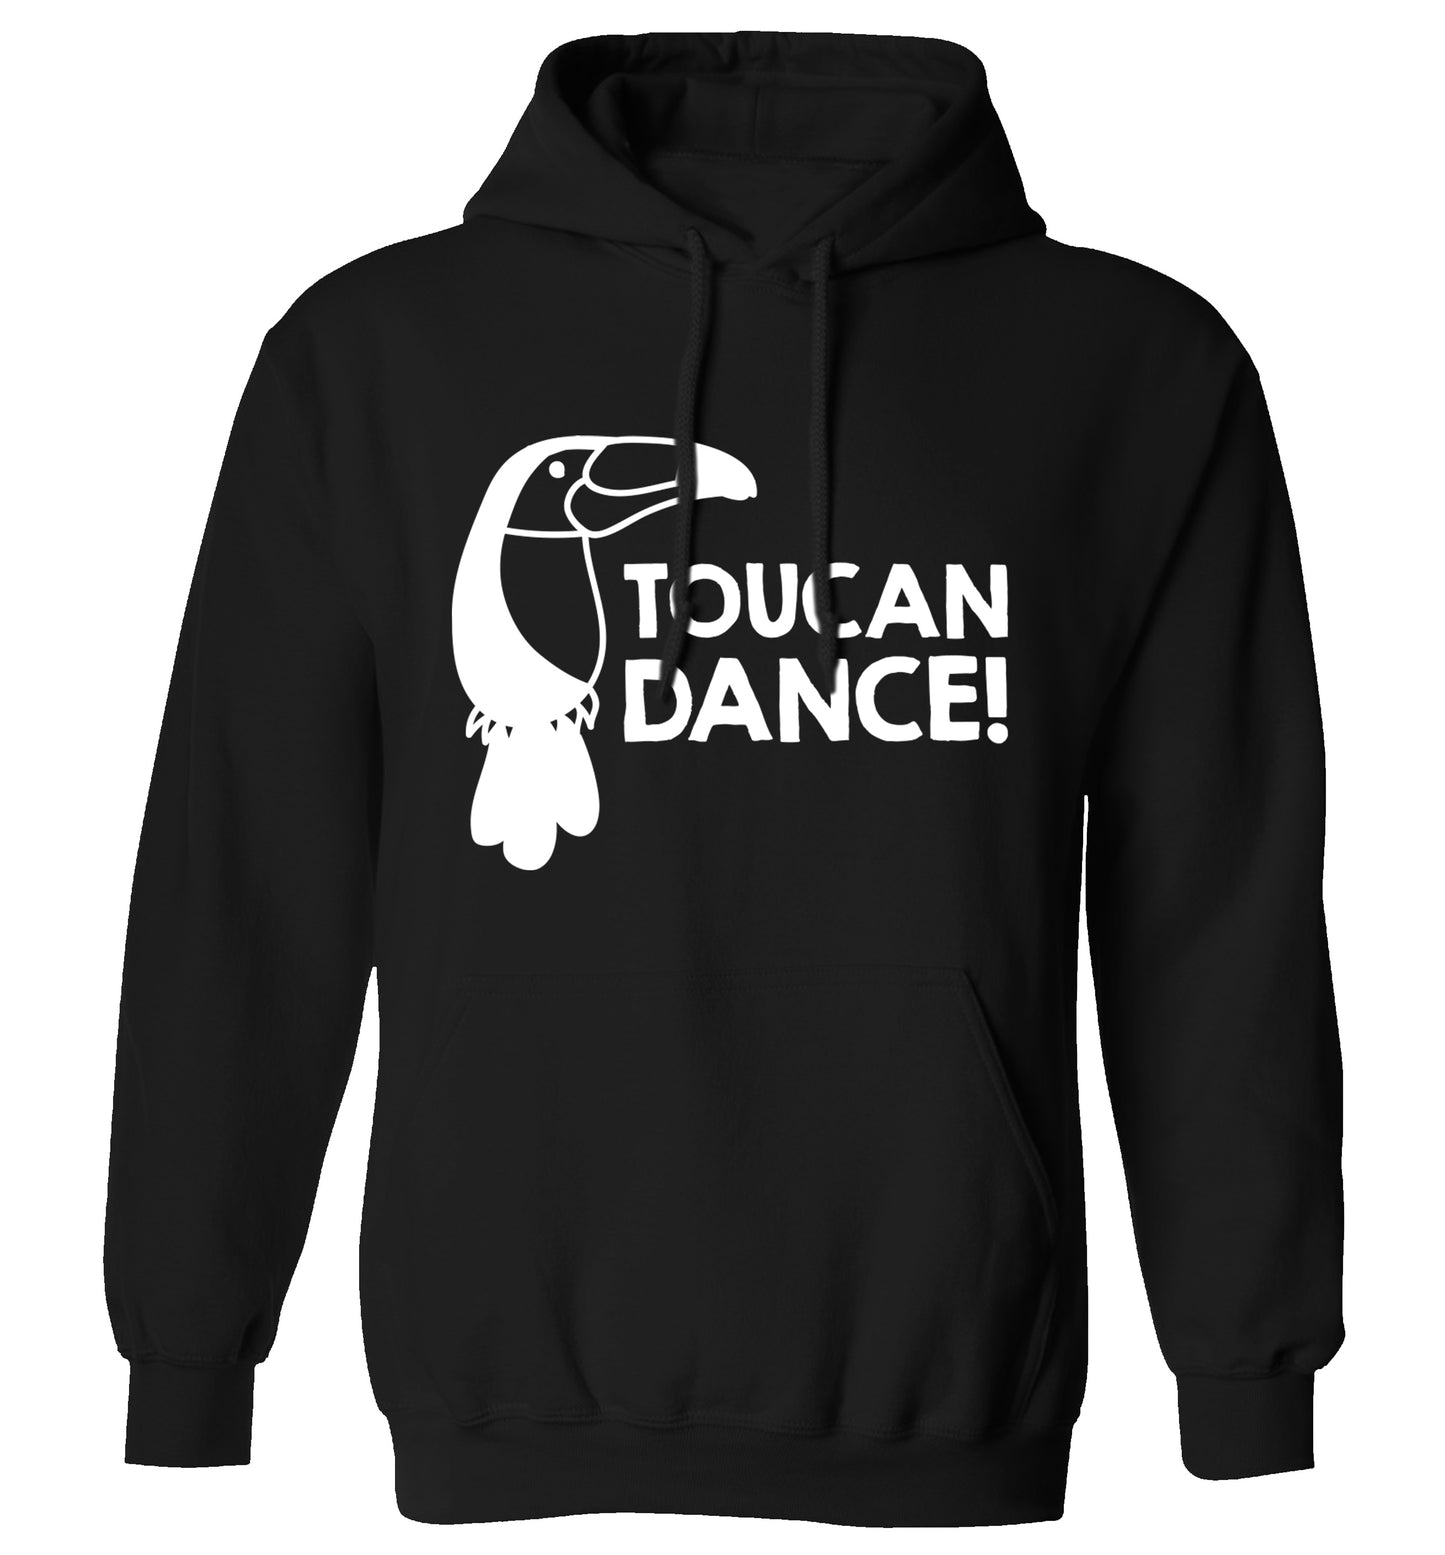 Toucan dance adults unisex black hoodie 2XL